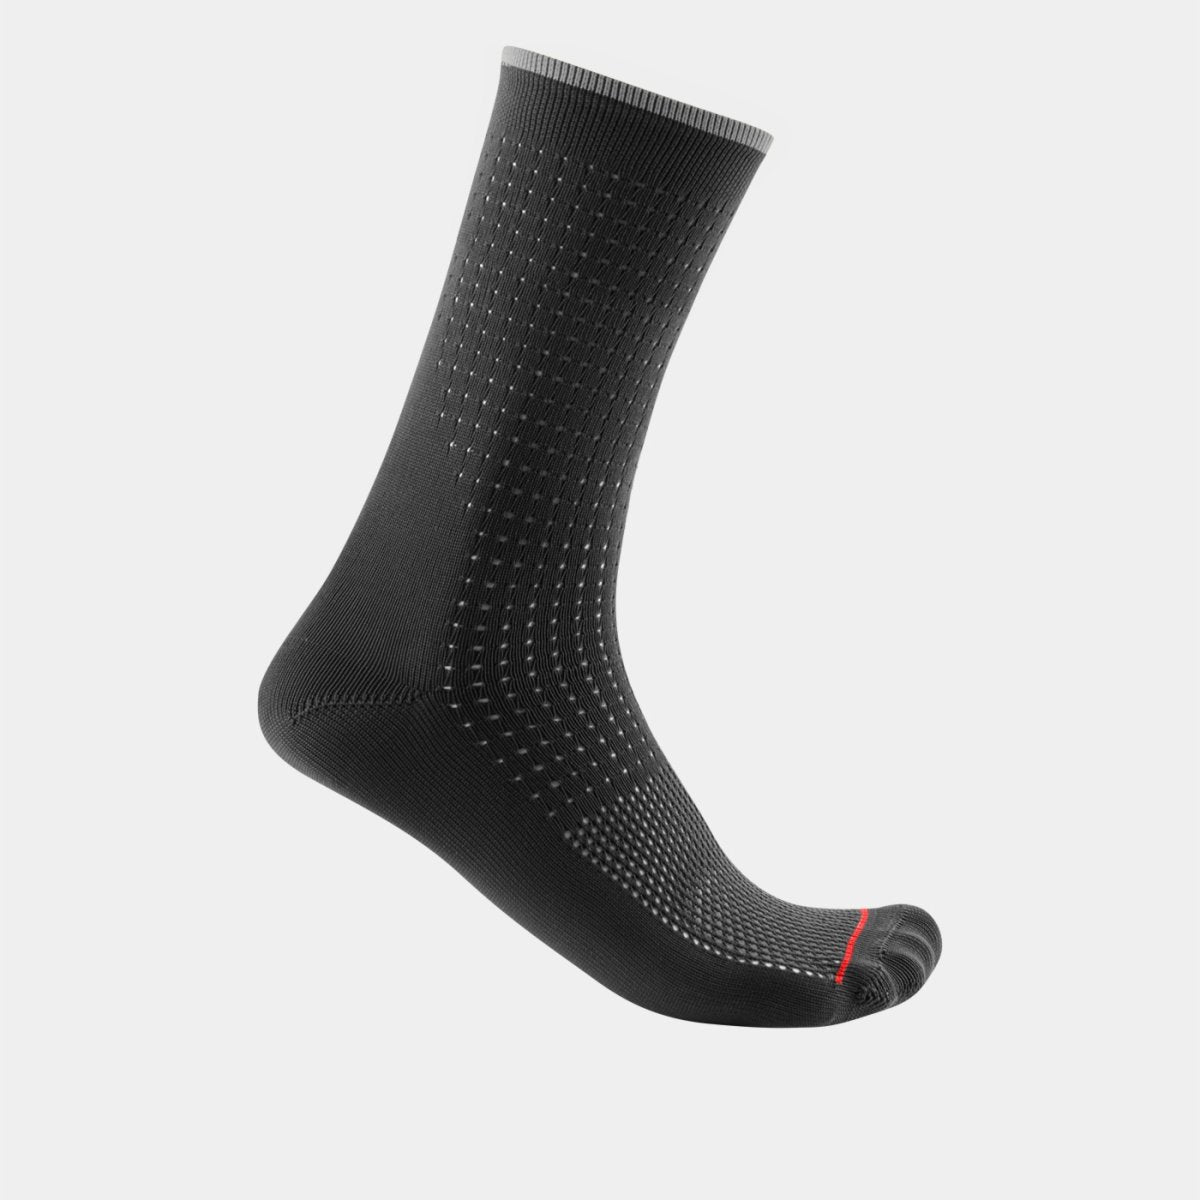 Castelli Premio 18 Men's Cycling Socks (Black)